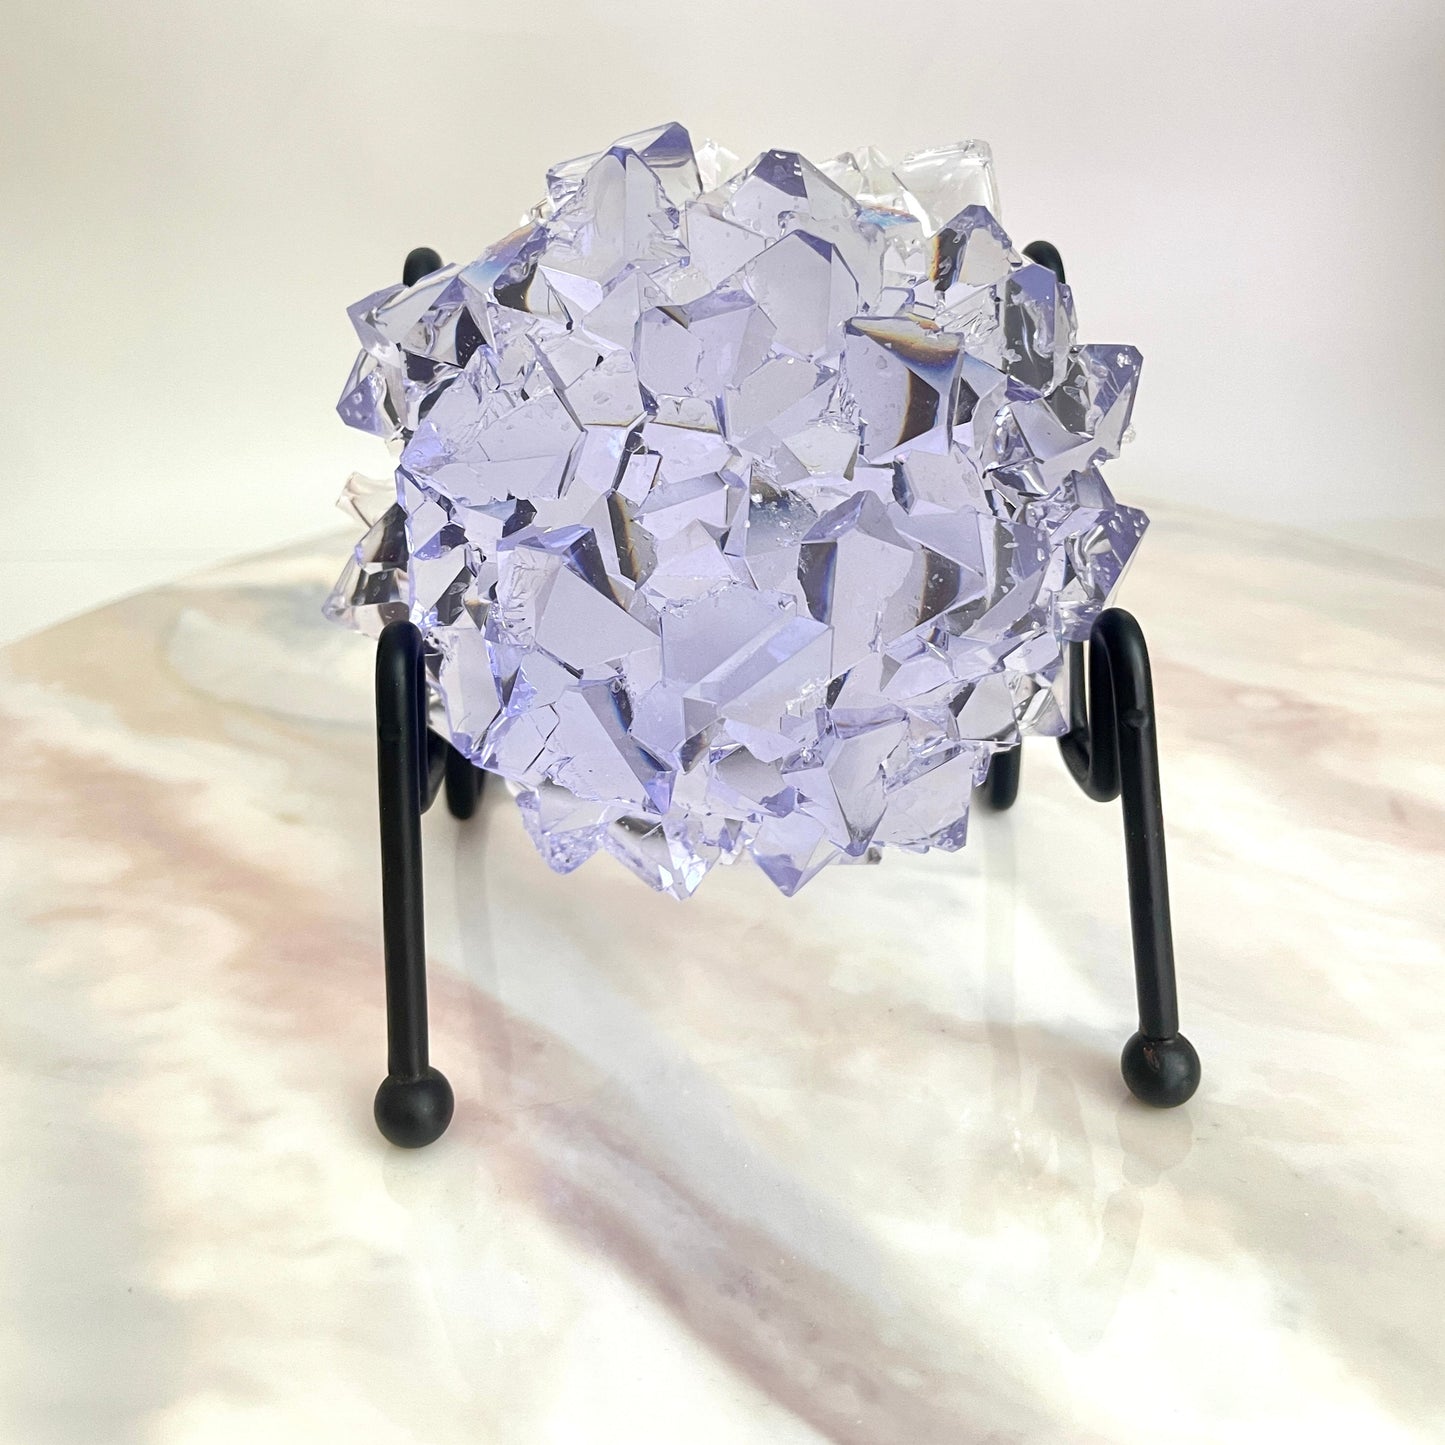 Luxusharz-Silikonform: Rundes Kristallcluster-Design